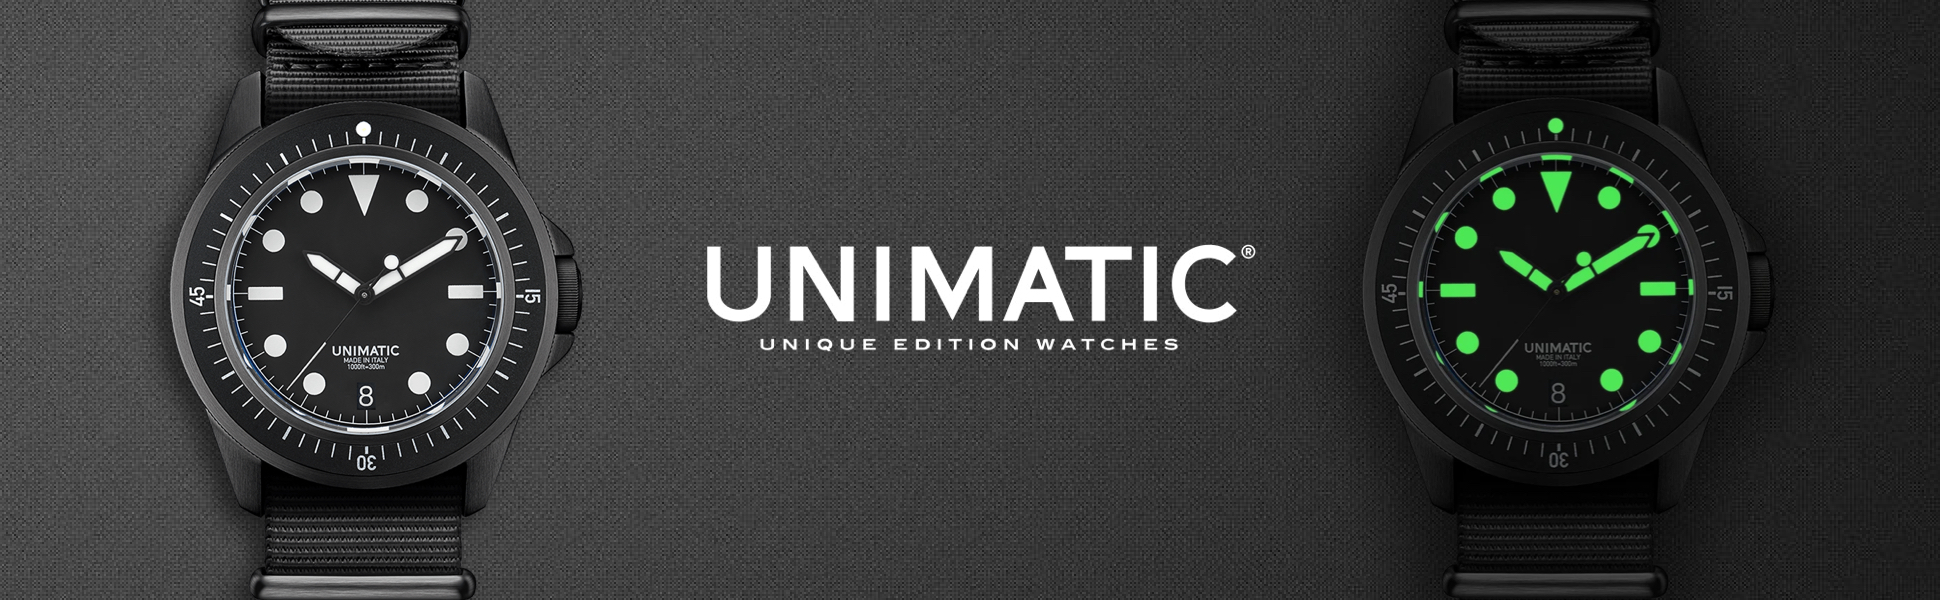 Unimatic - Image